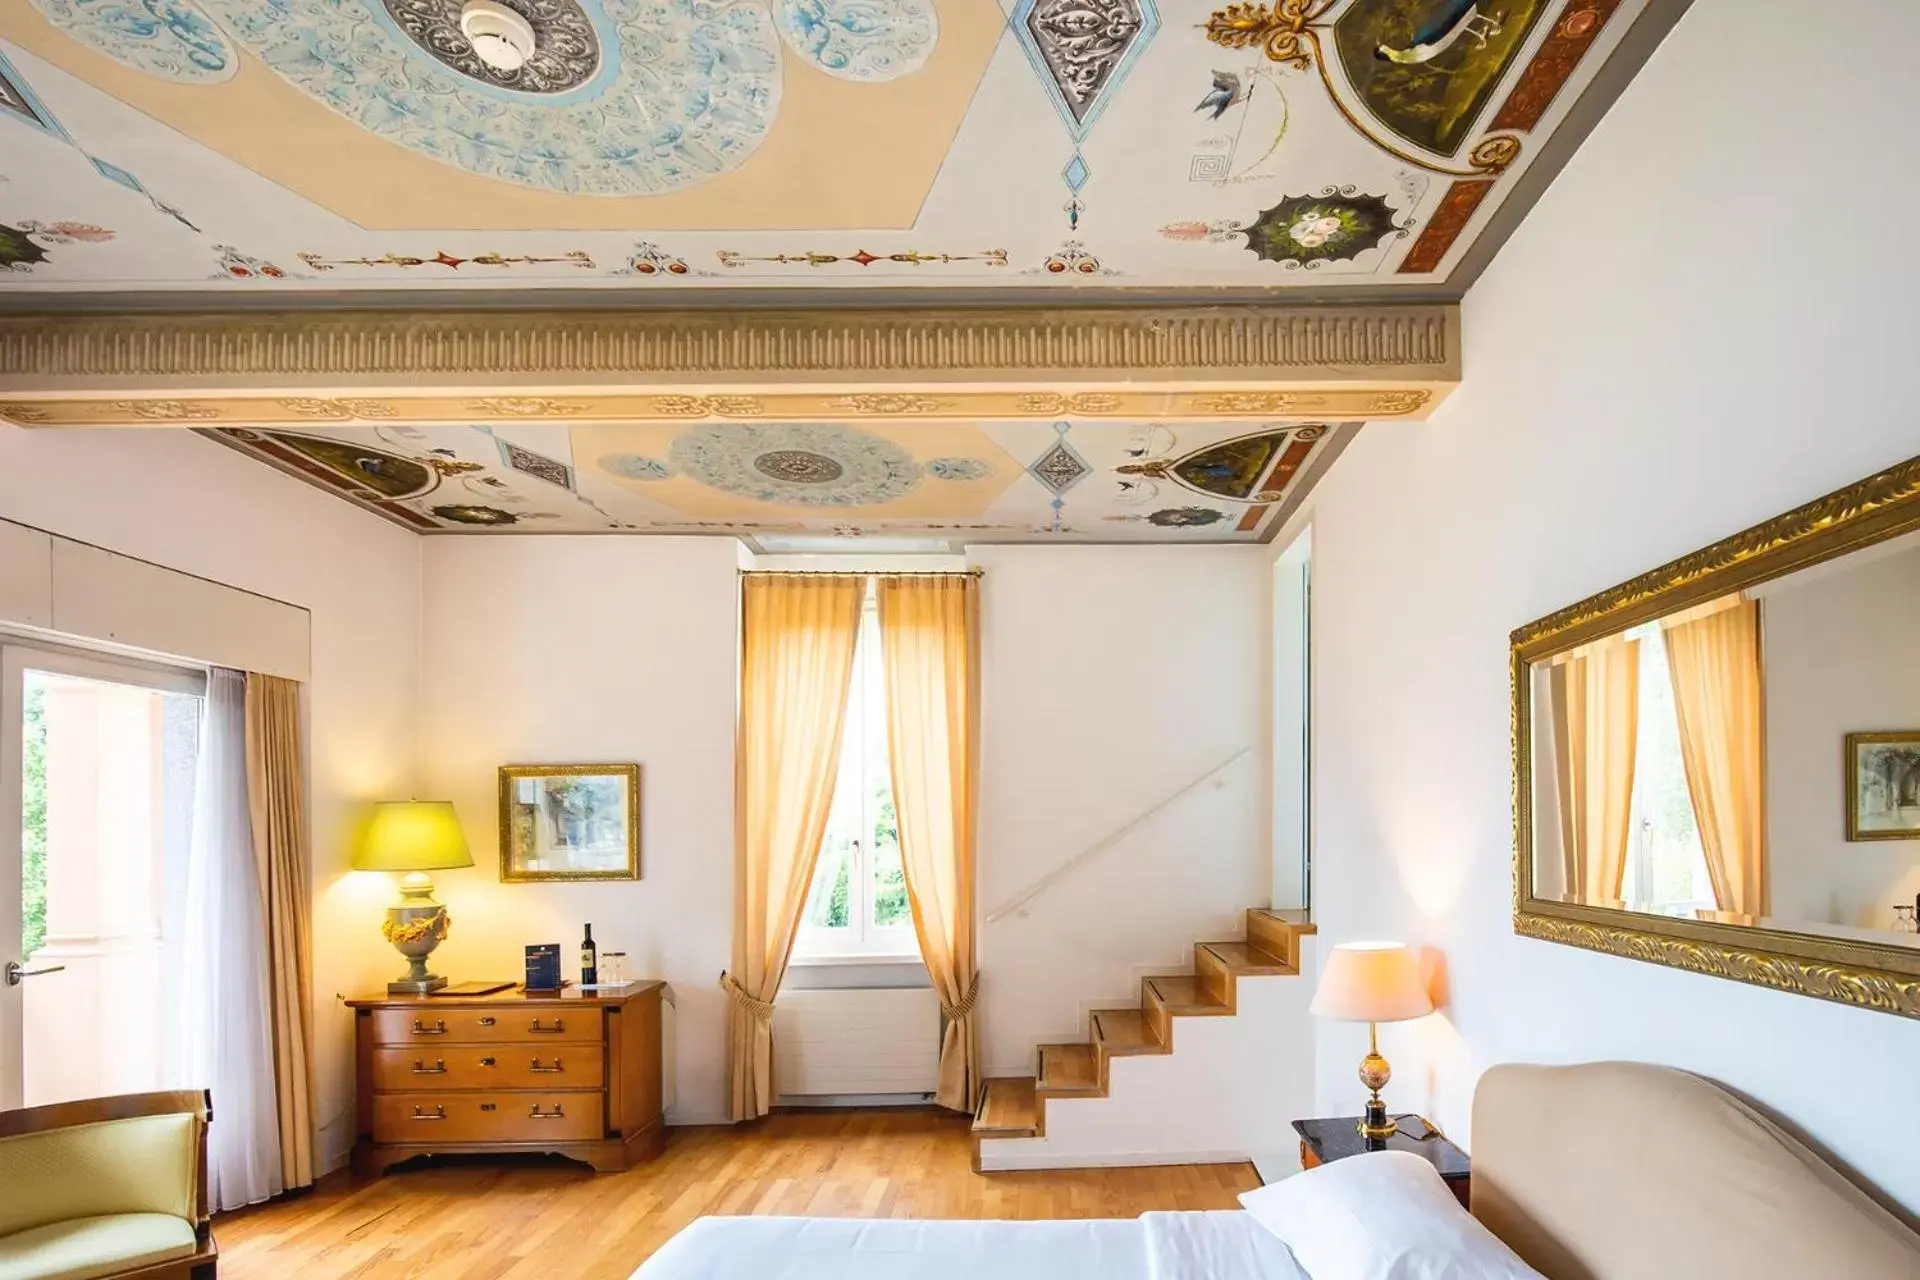 Decorative detail in Villa Sassa Hotel, Residence & Spa - Ticino Hotels Group